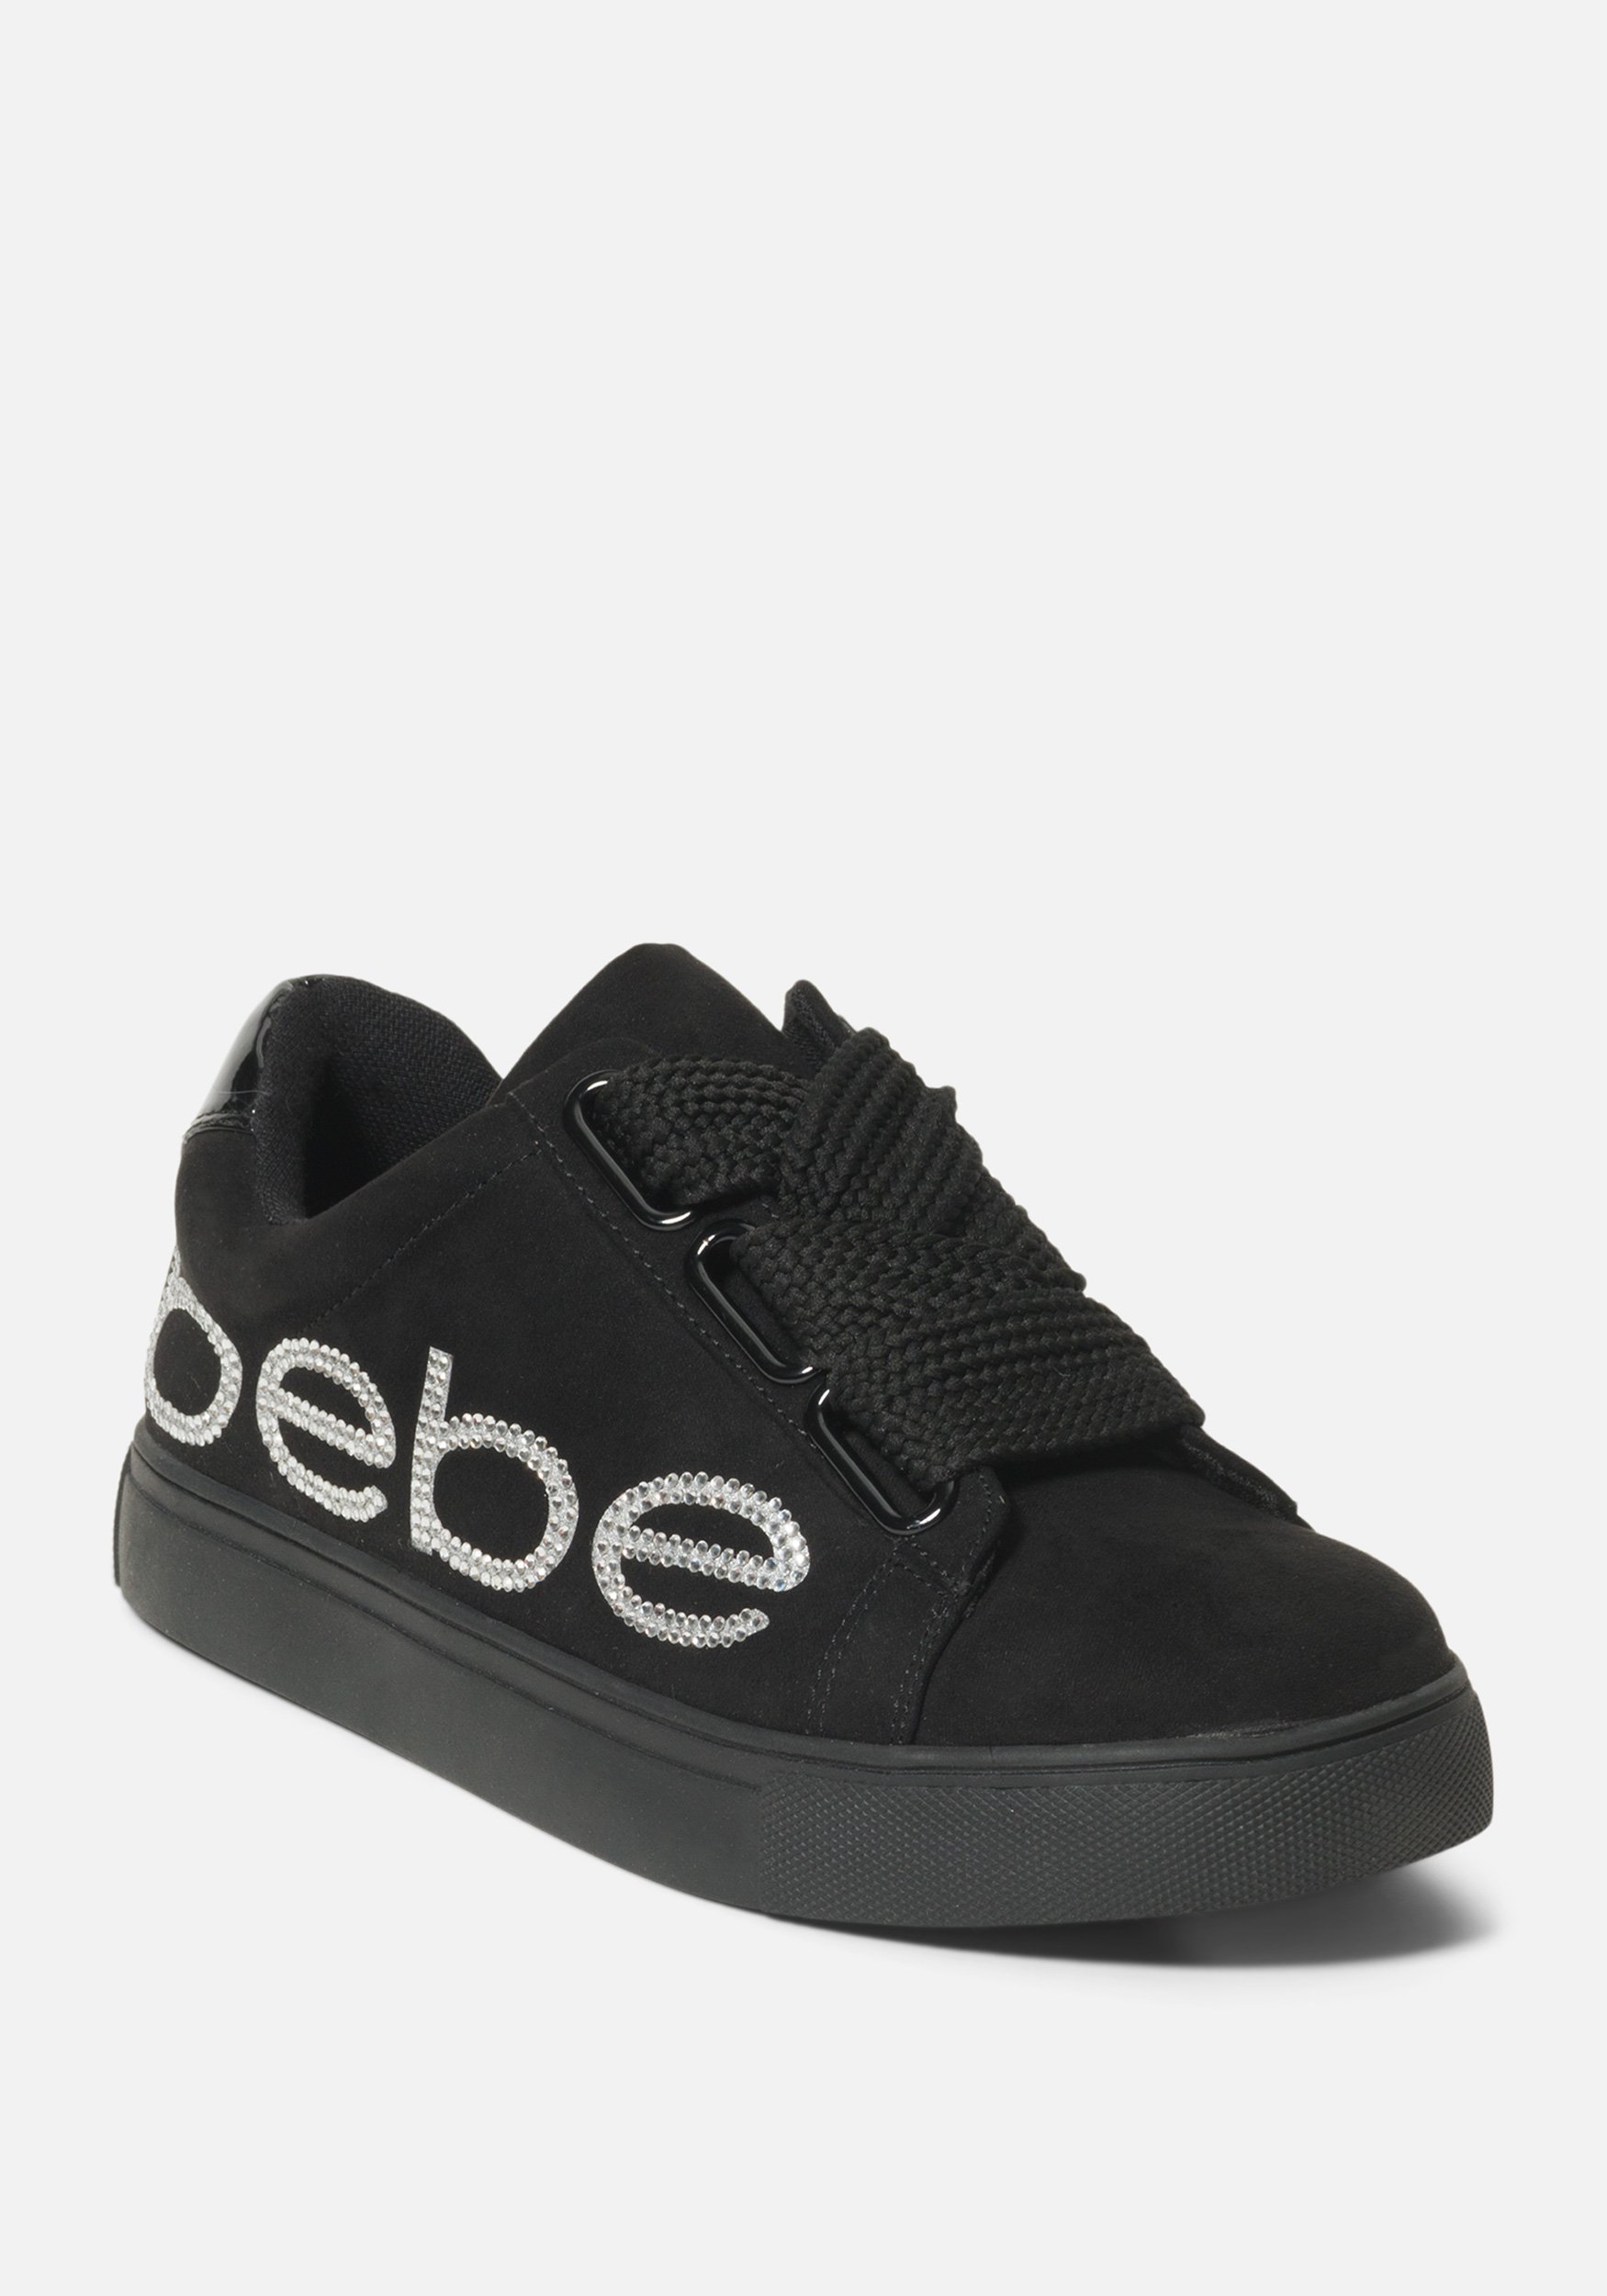 Women's Cabree Bebe Logo Sneakers, Size 10.5 in Black Synthetic